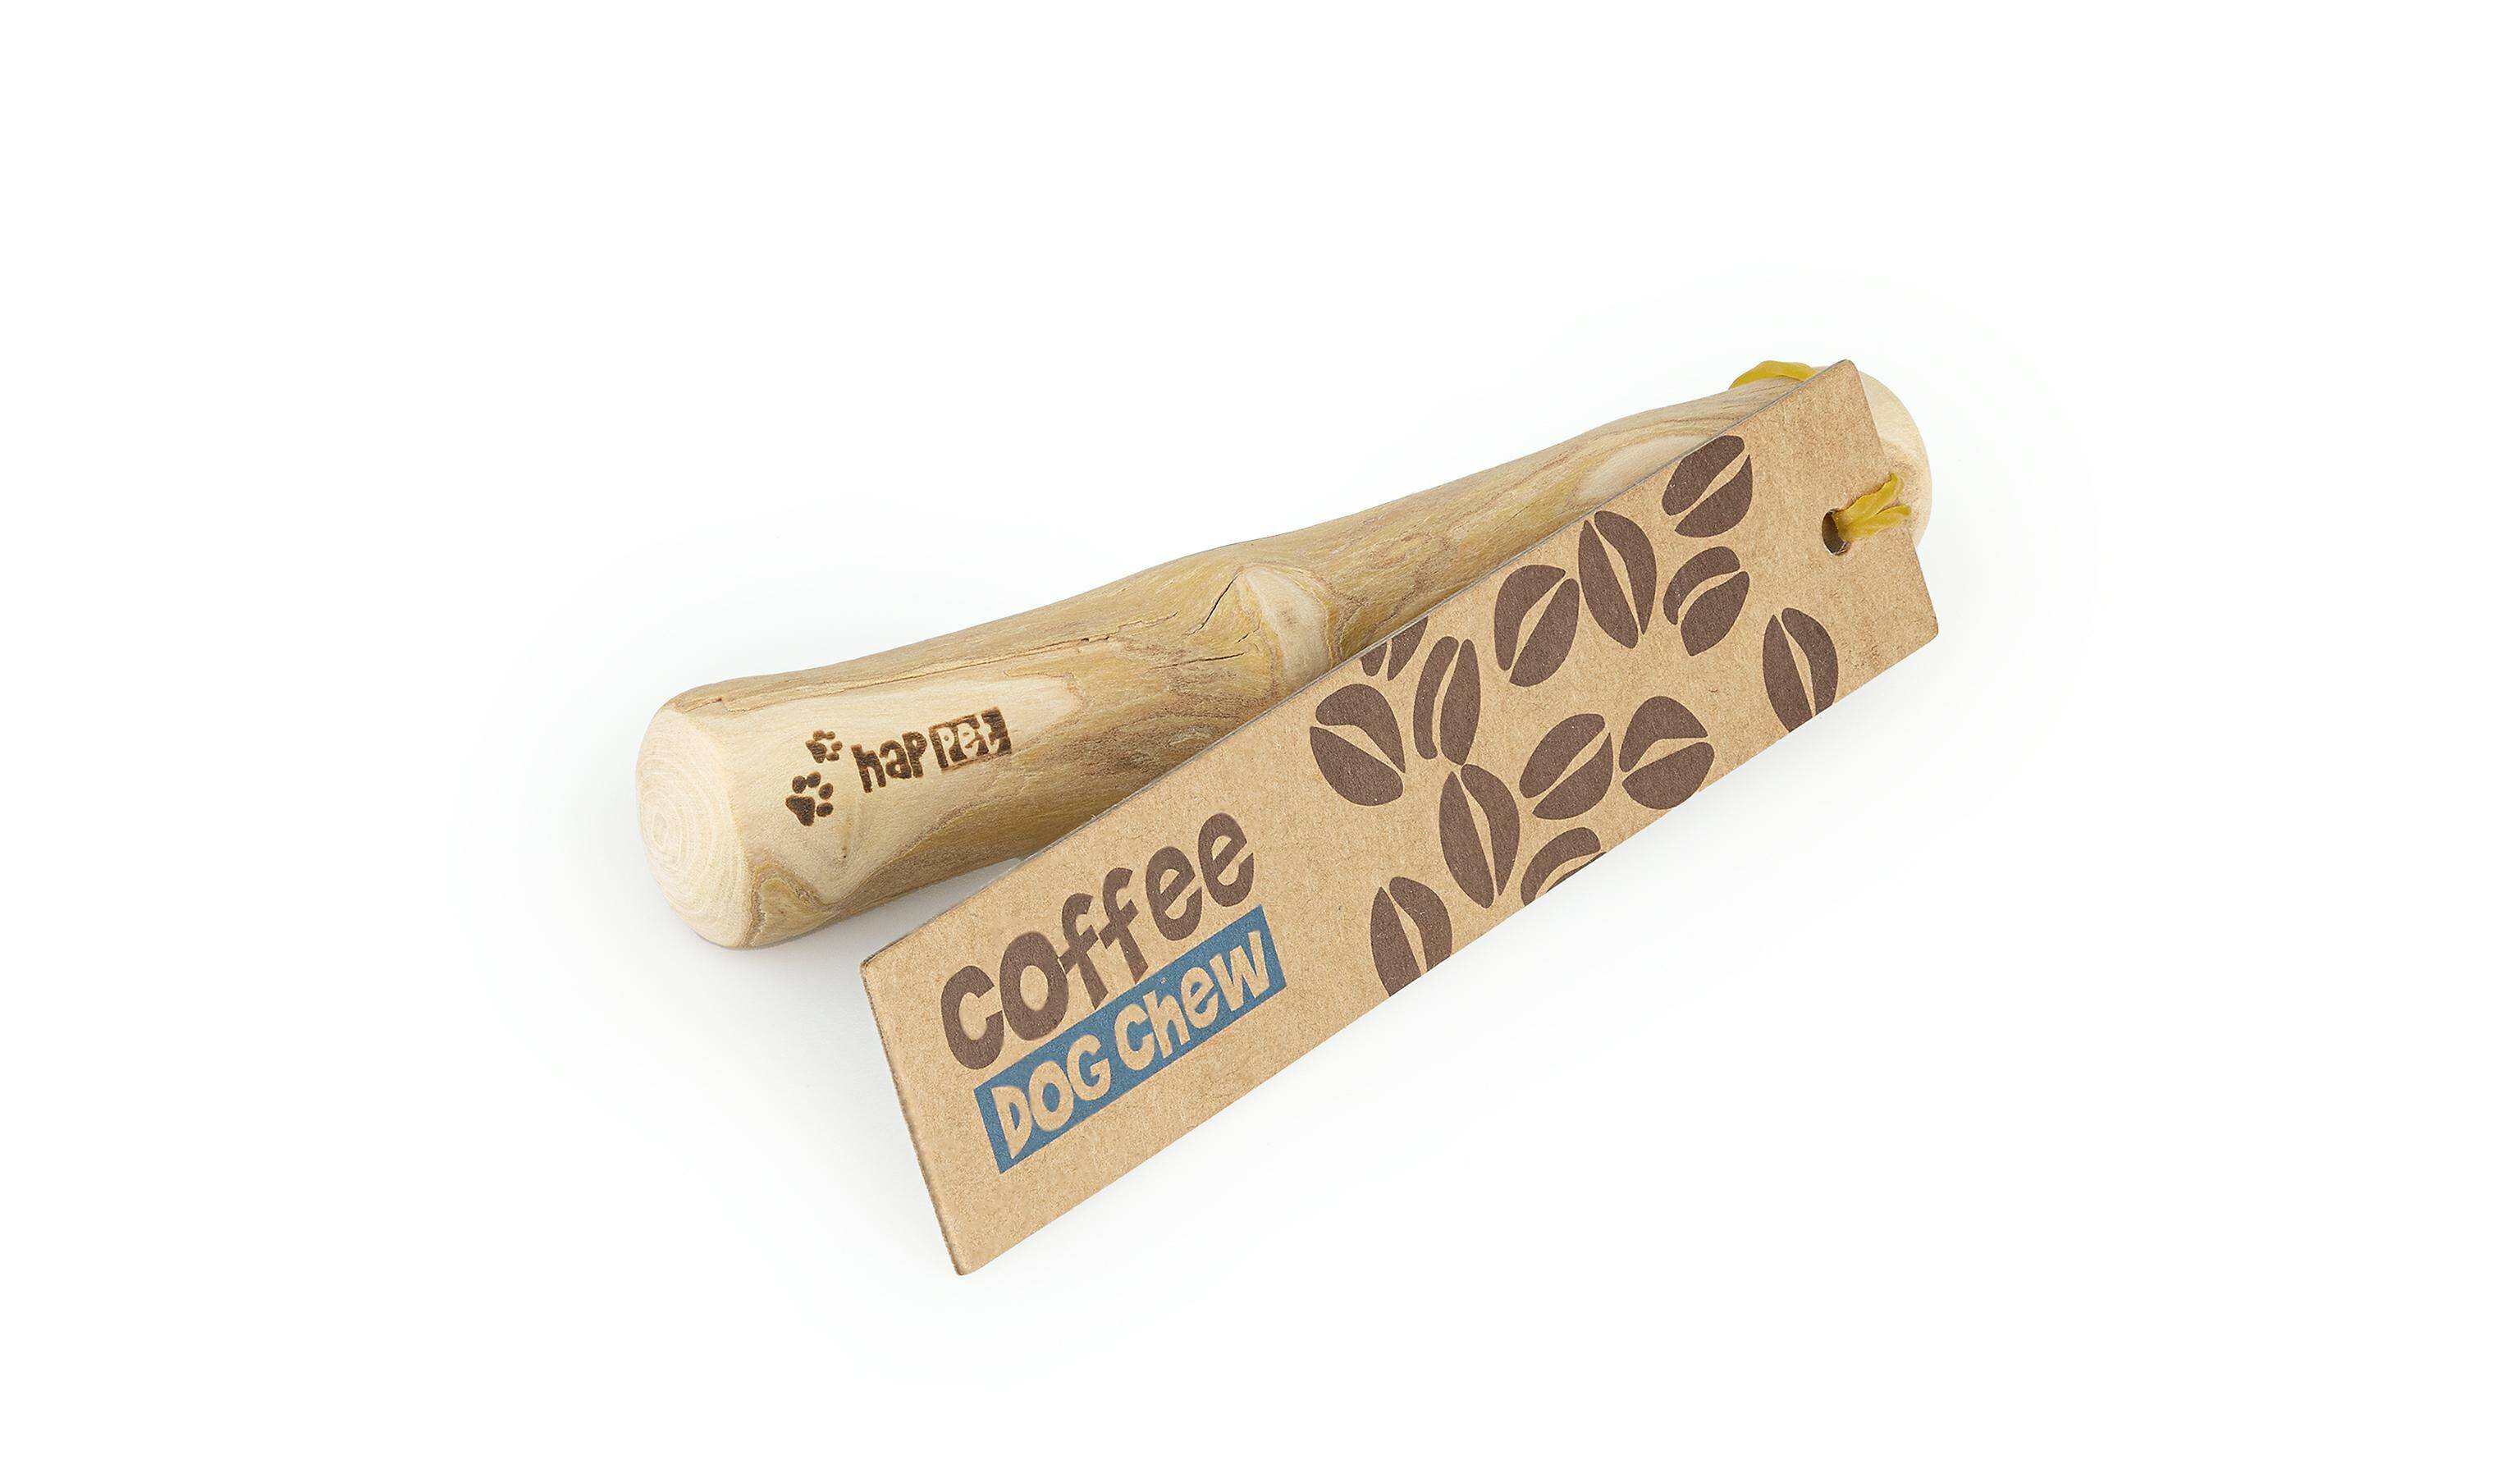 Coffee dog stick XS